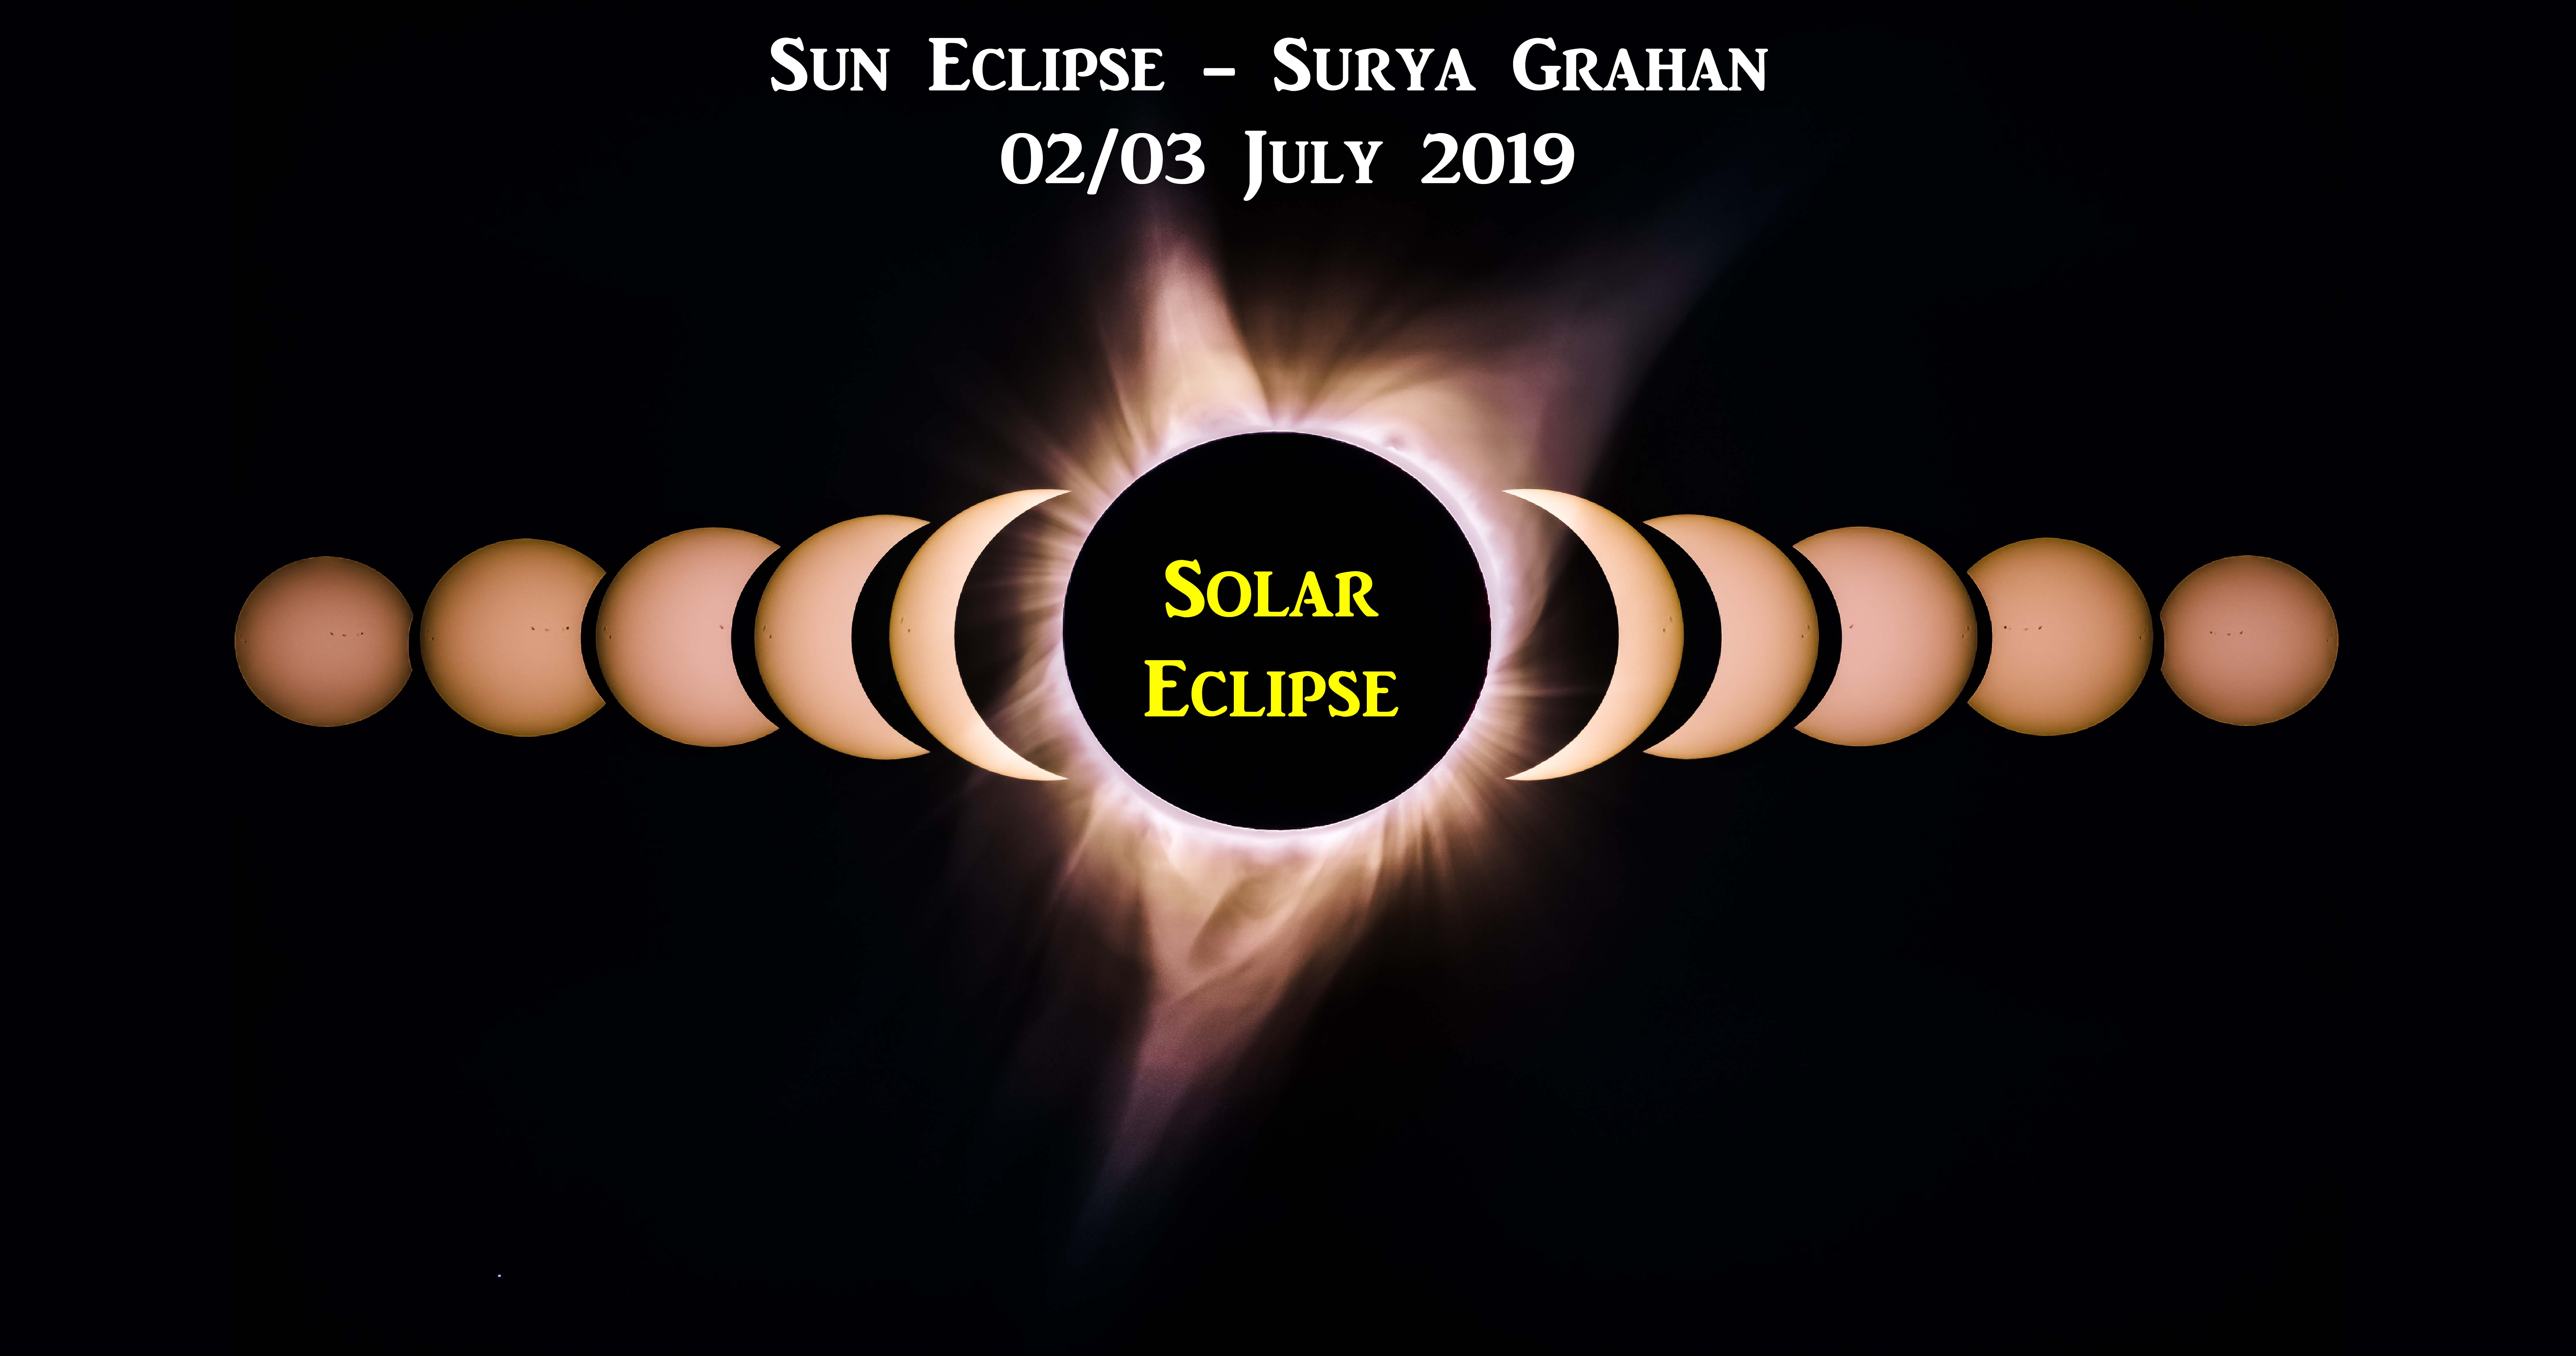 Solar eclipse - Sun Eclipse - Surya Grahan 02/03 July 2019 - Ishwar Maharaj